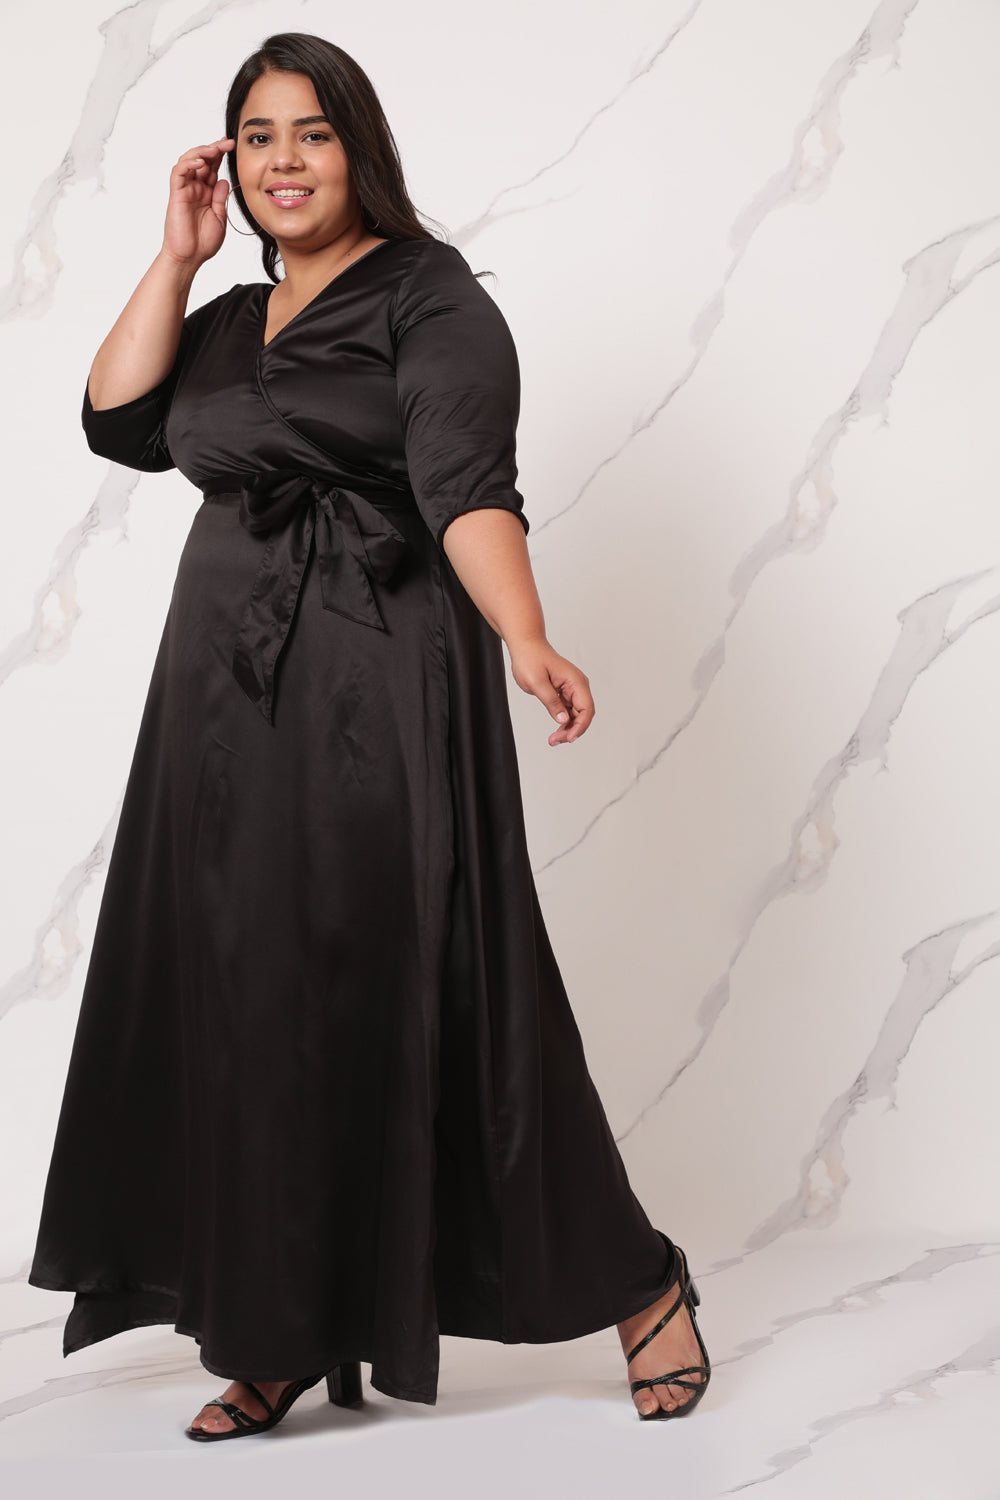 Comfortable Black Satin Cocktail Wrap Dress